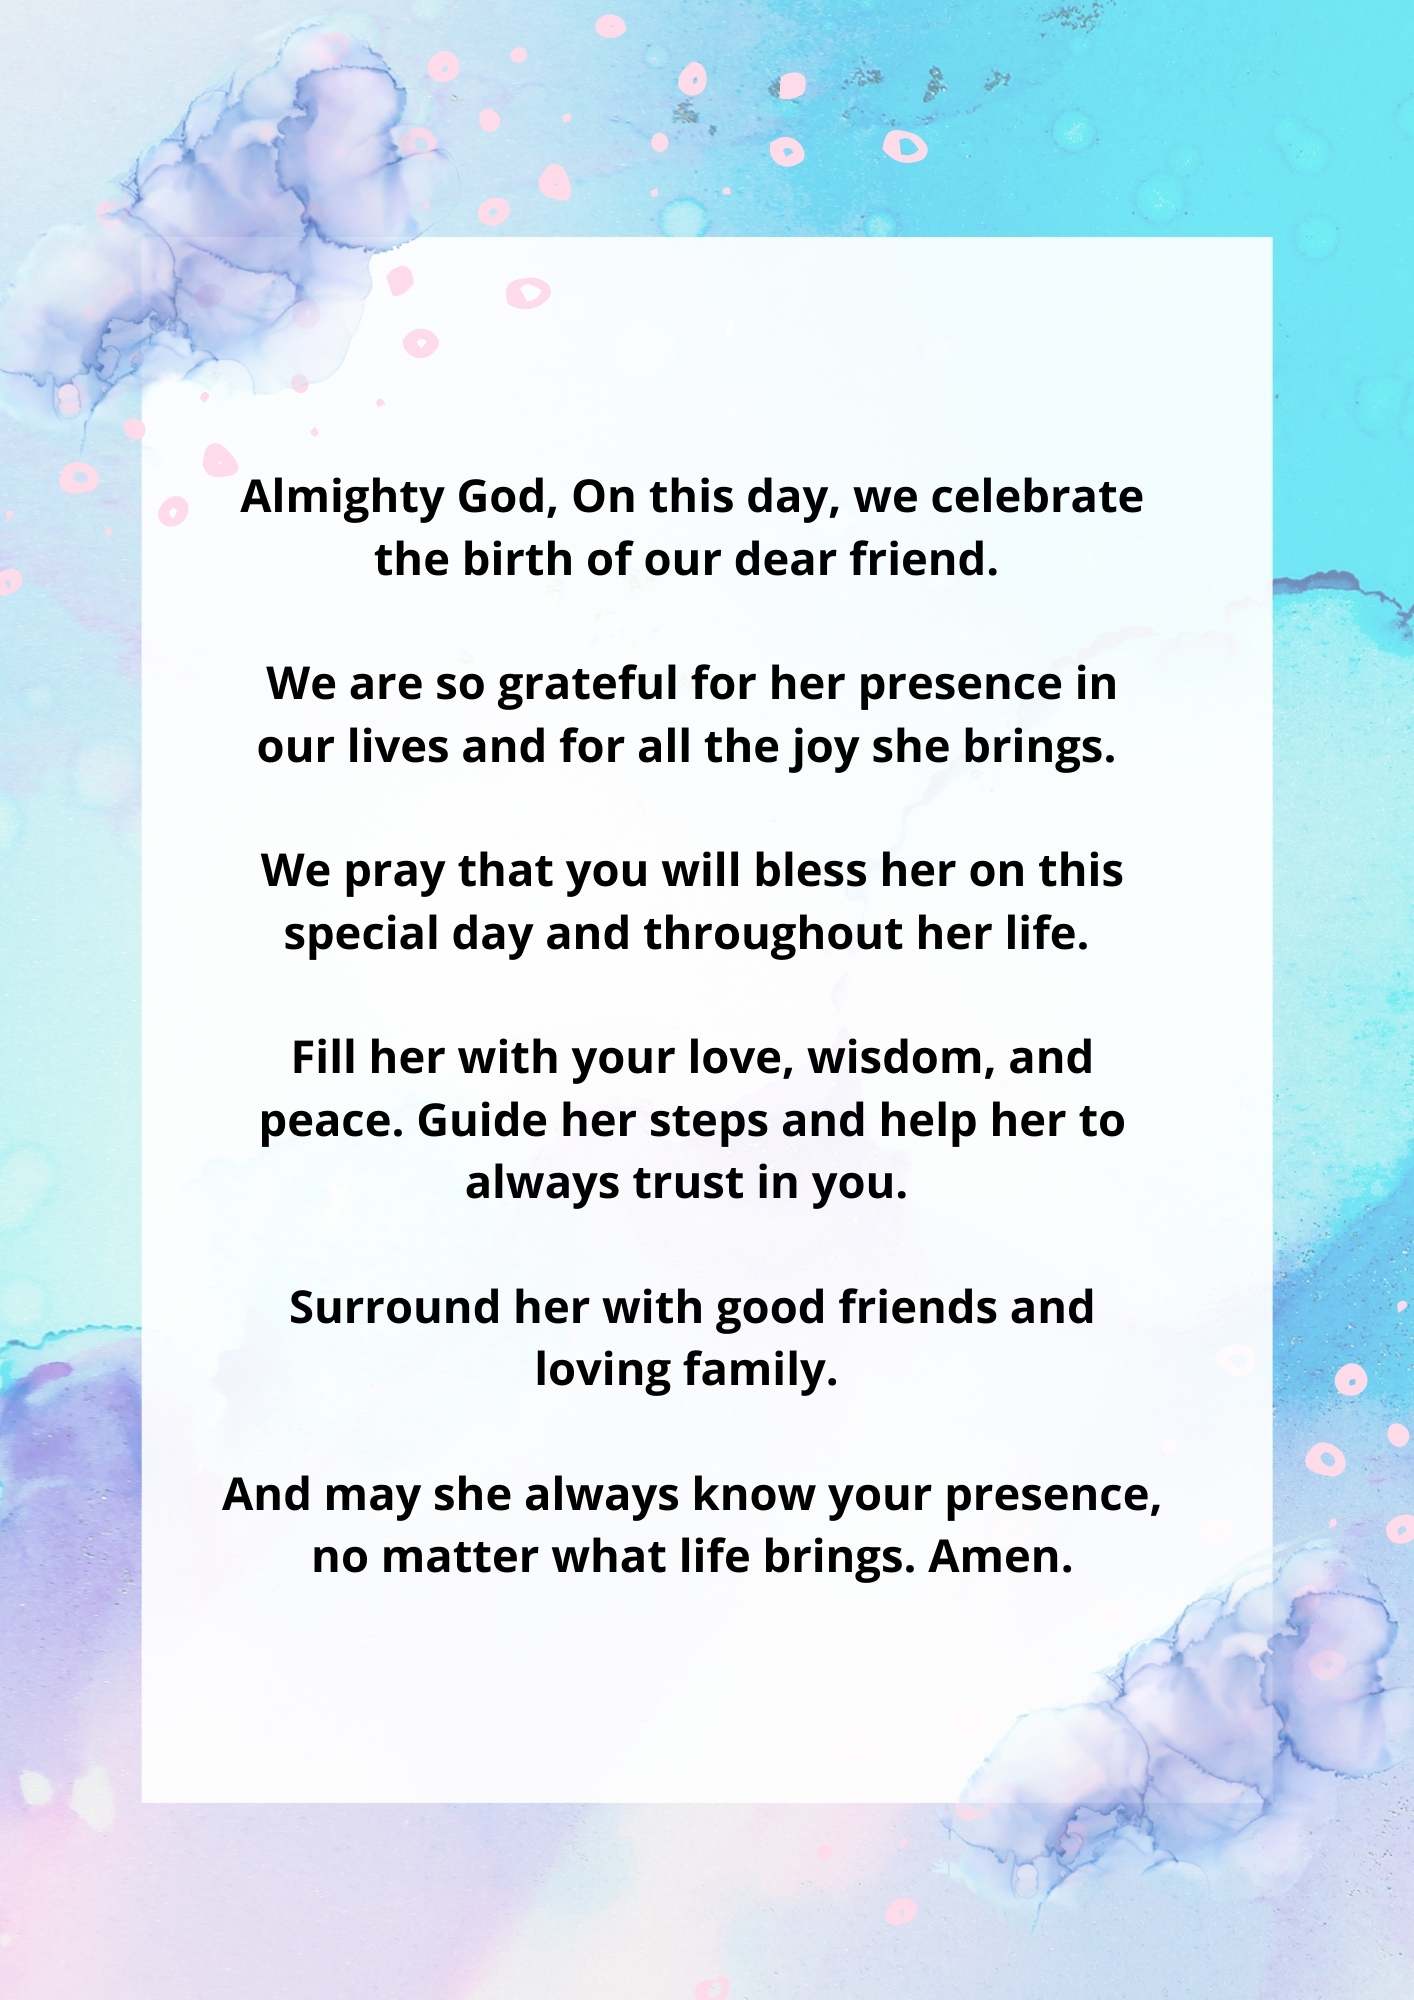 A Christian Birthday Prayer For A Female Friend